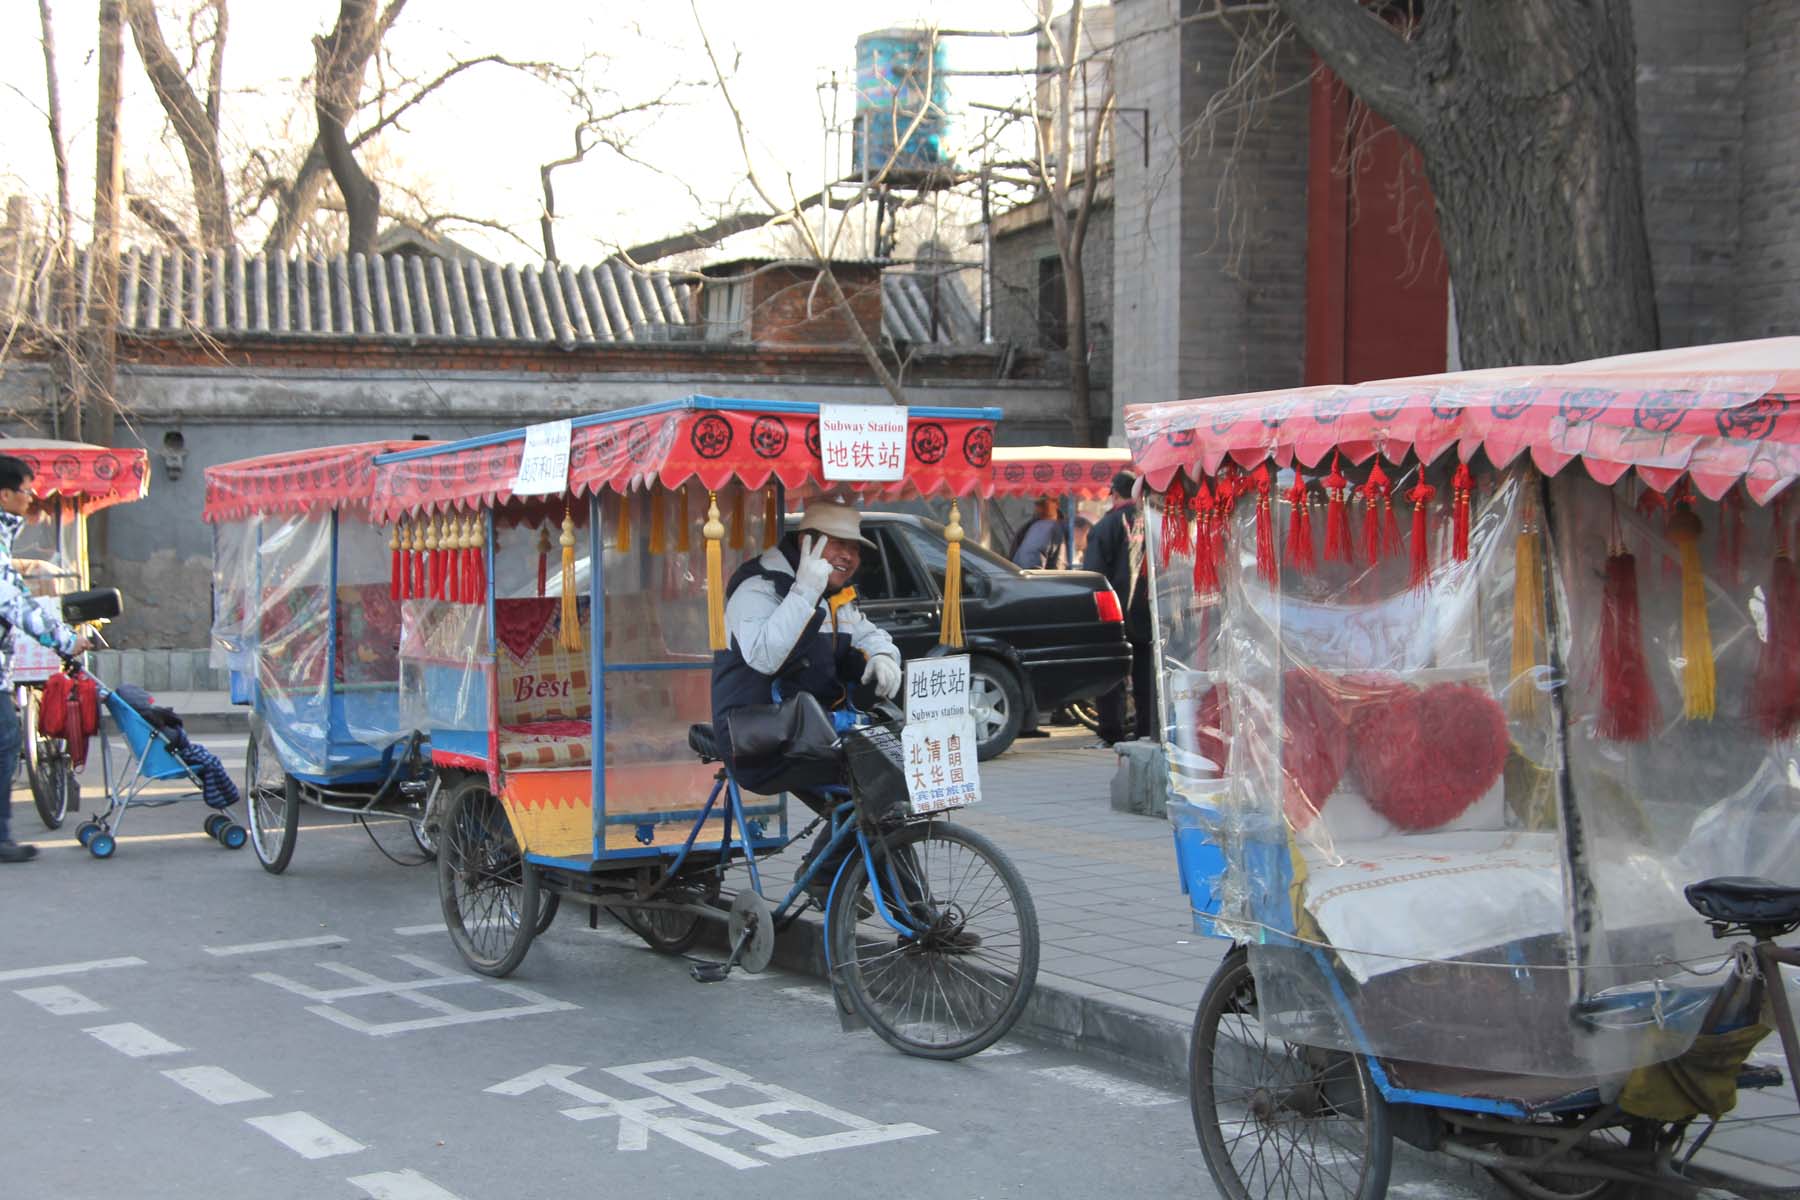 Rickshaws for hire on a Beijing street.